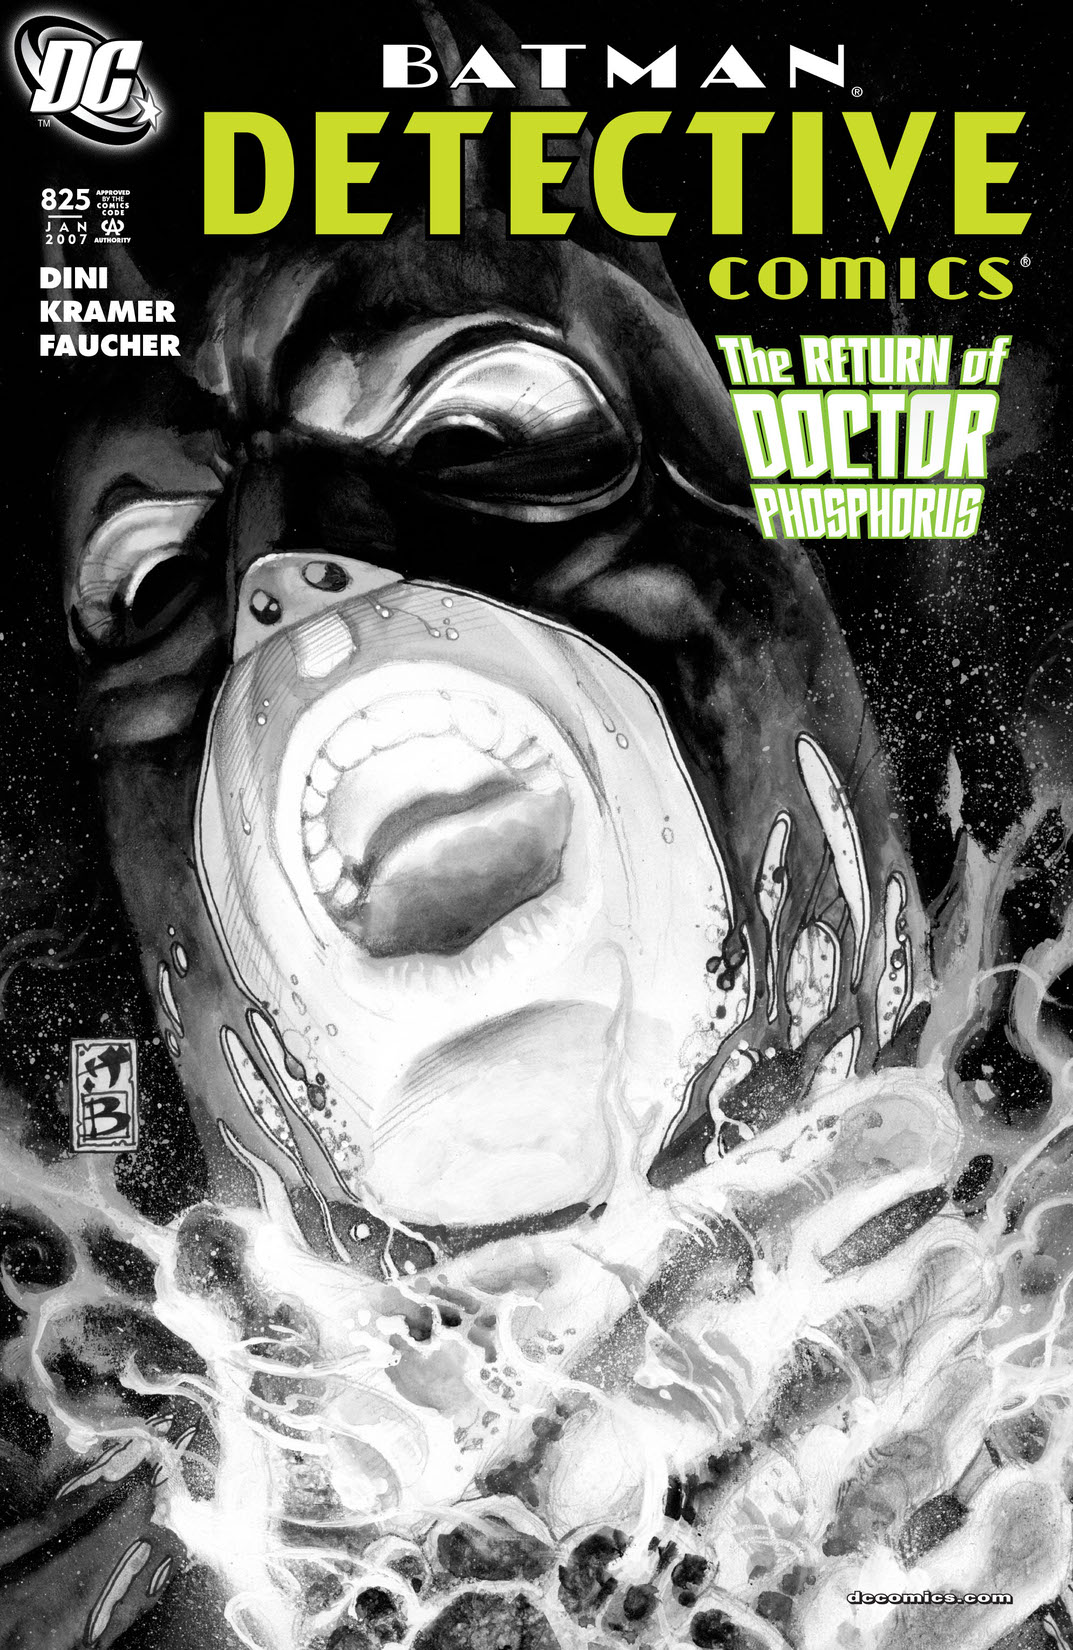 Detective Comics (1937-) #825 preview images